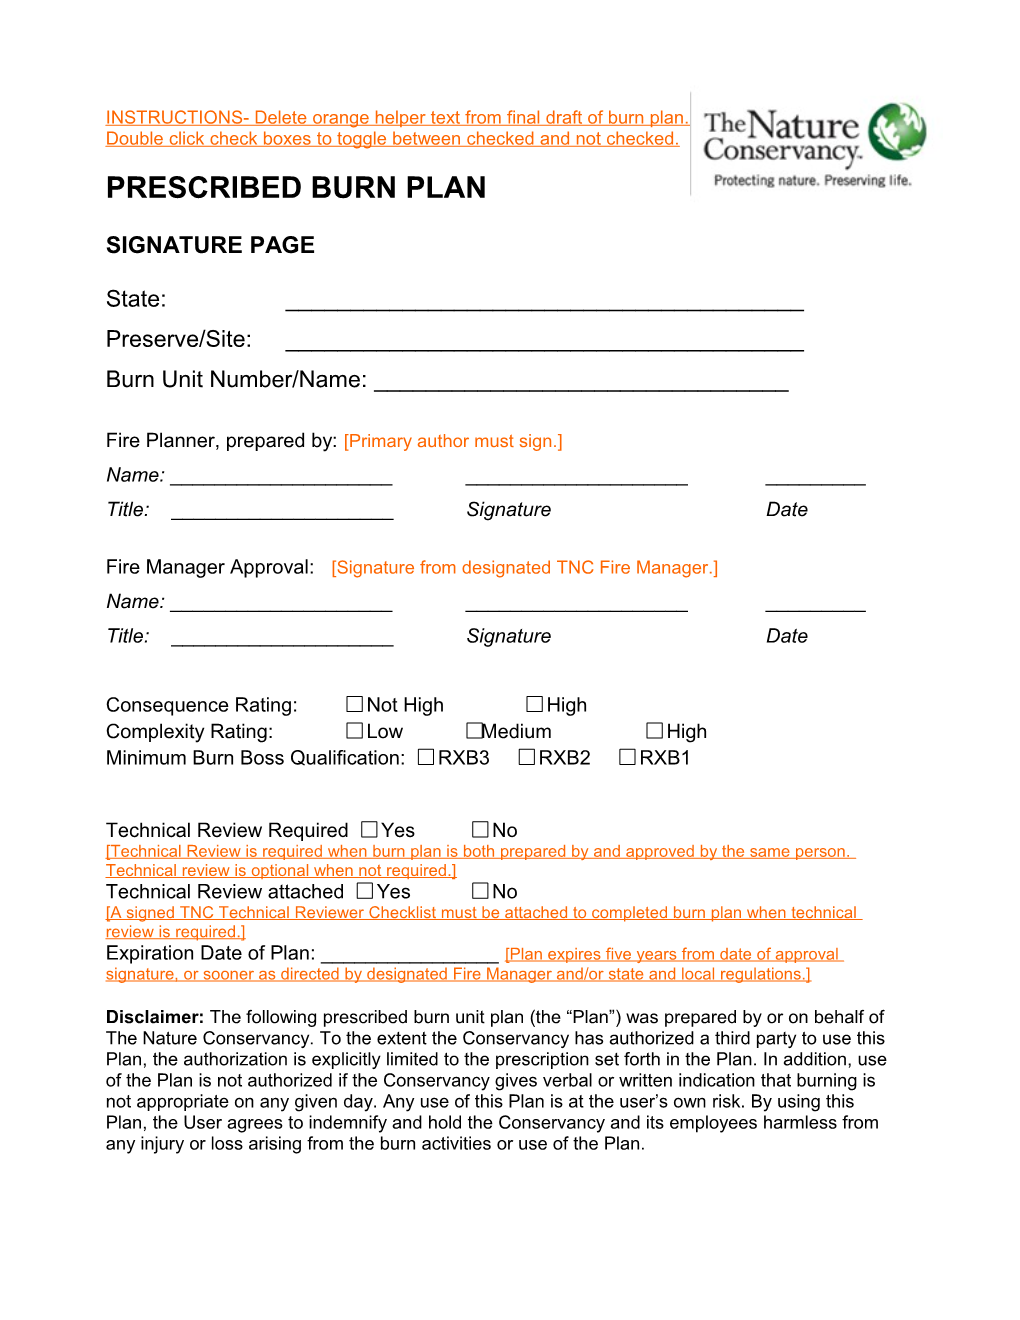 INSTRUCTIONS- Delete Orange Helper Text from Final Draft of Burn Plan